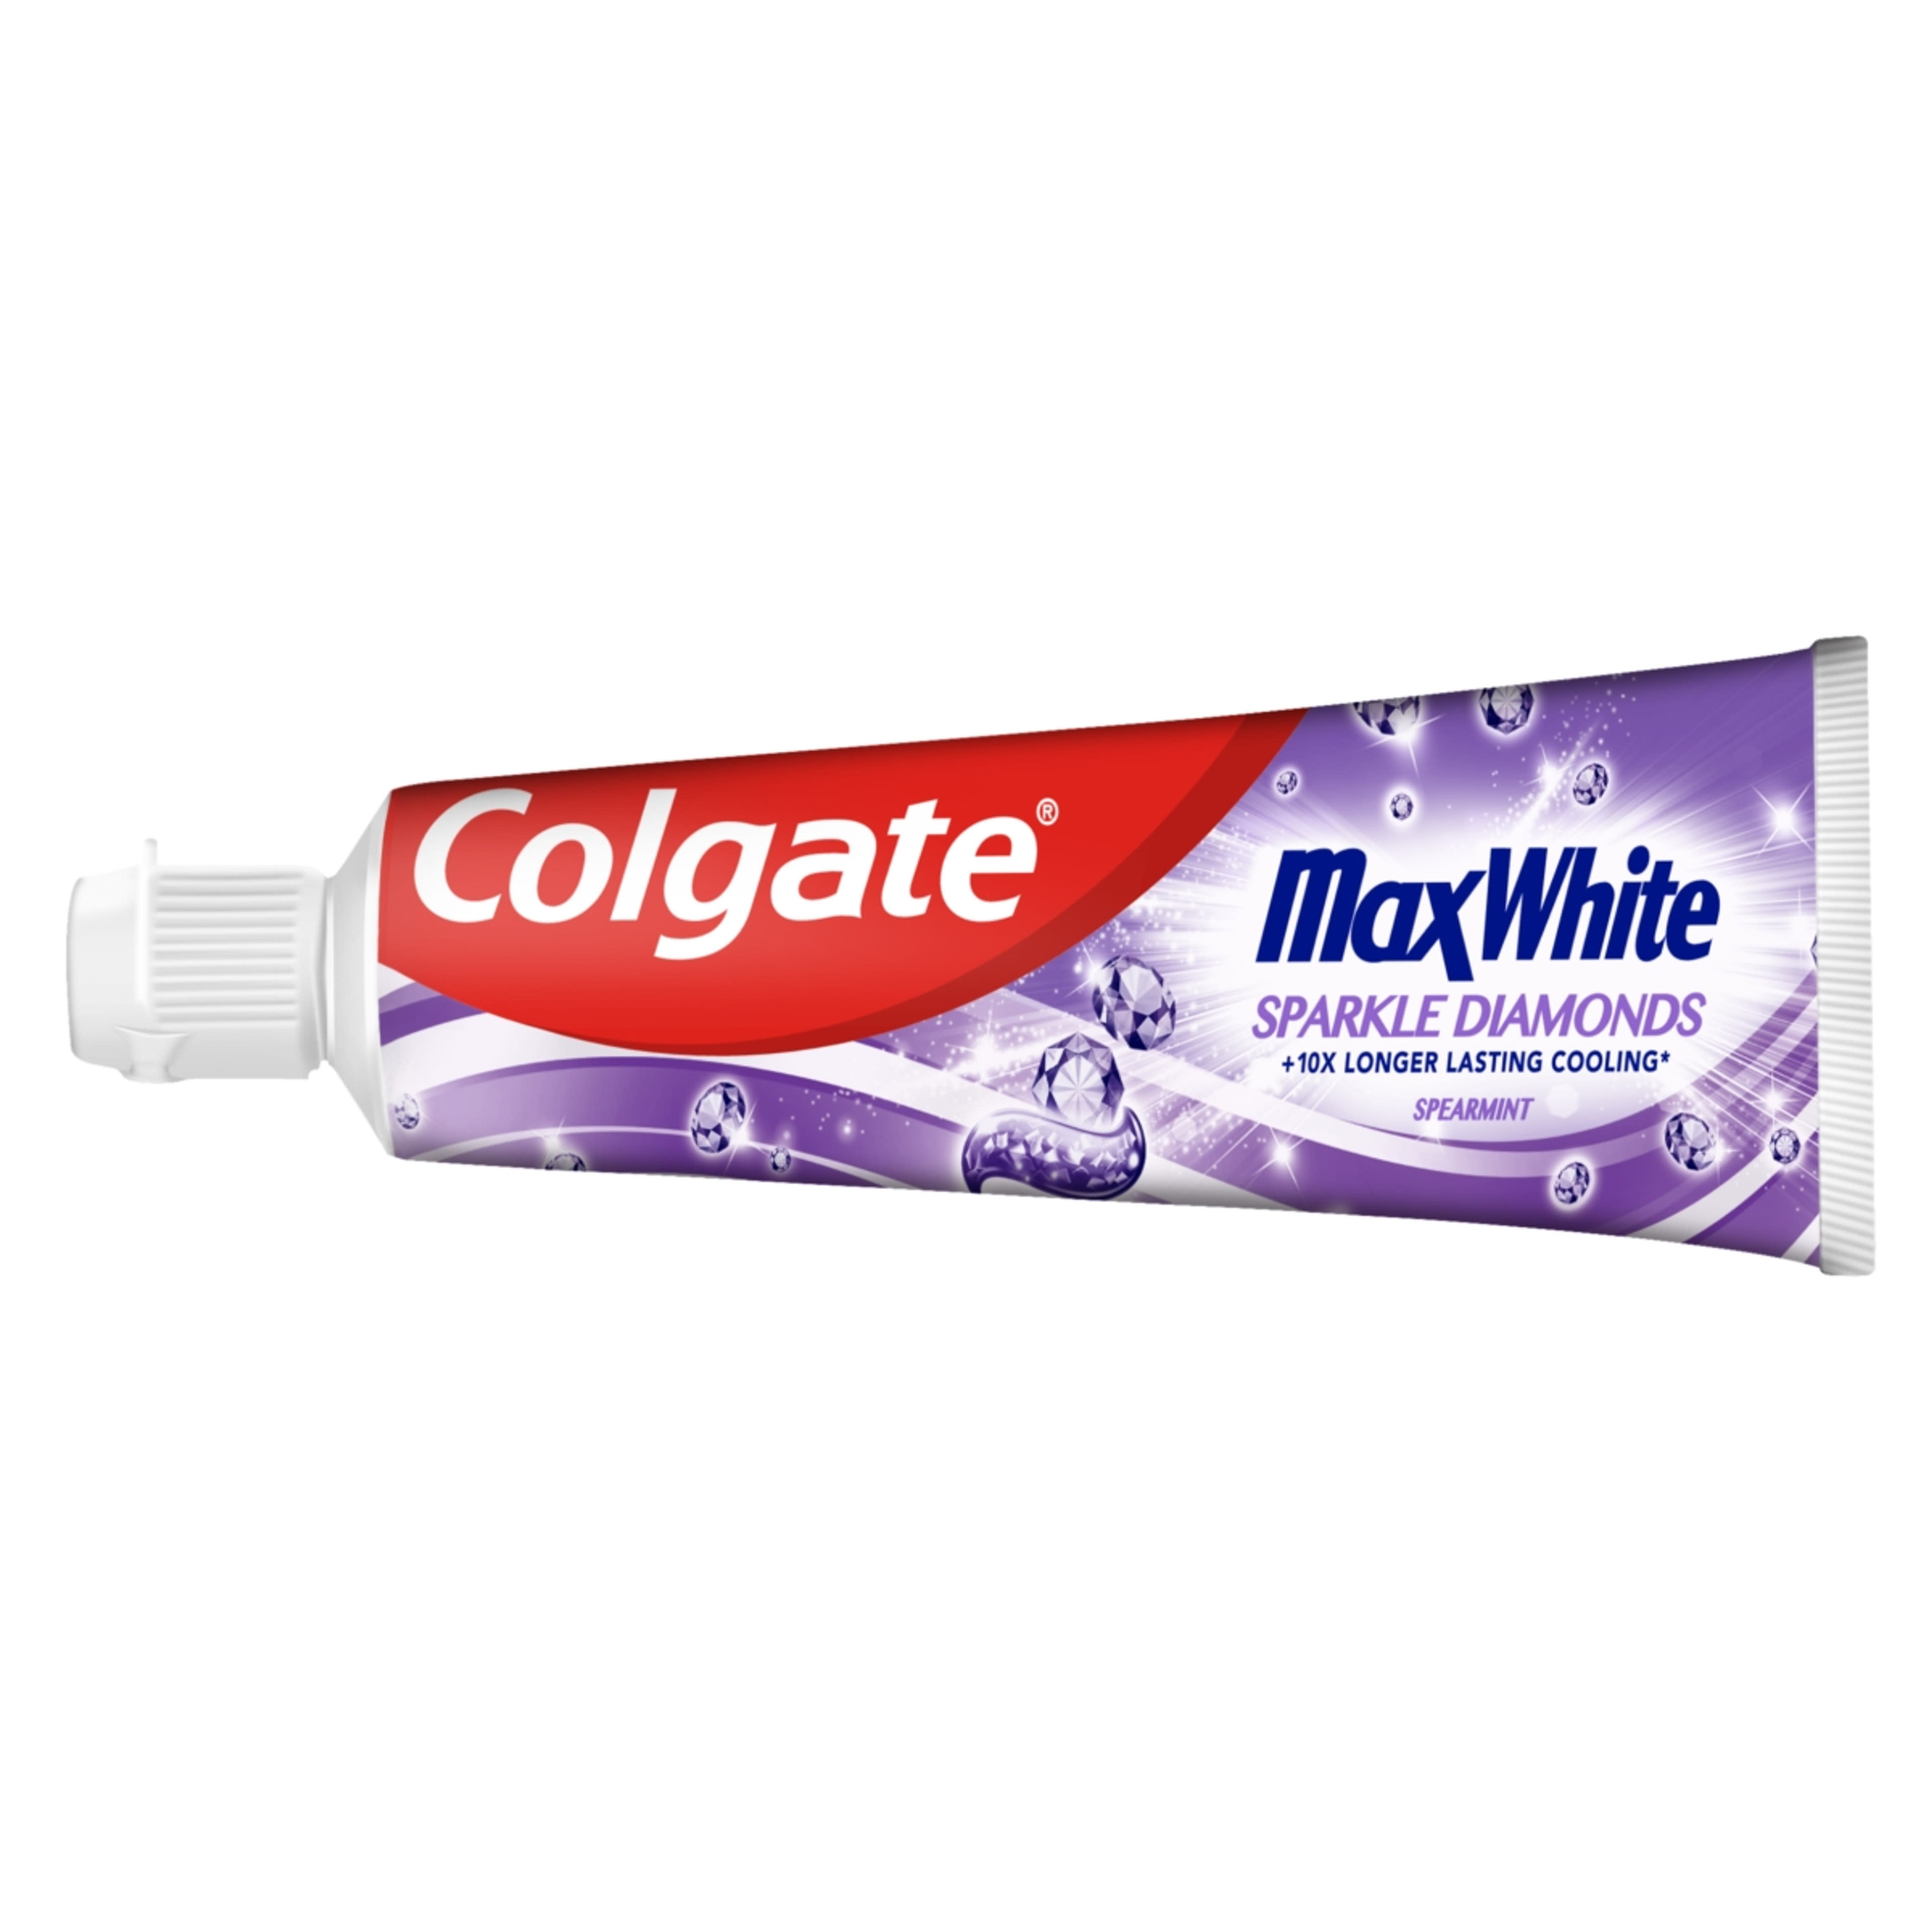 Colgate Max White Sparkle Diamonds fogkrém - 75 ml-2